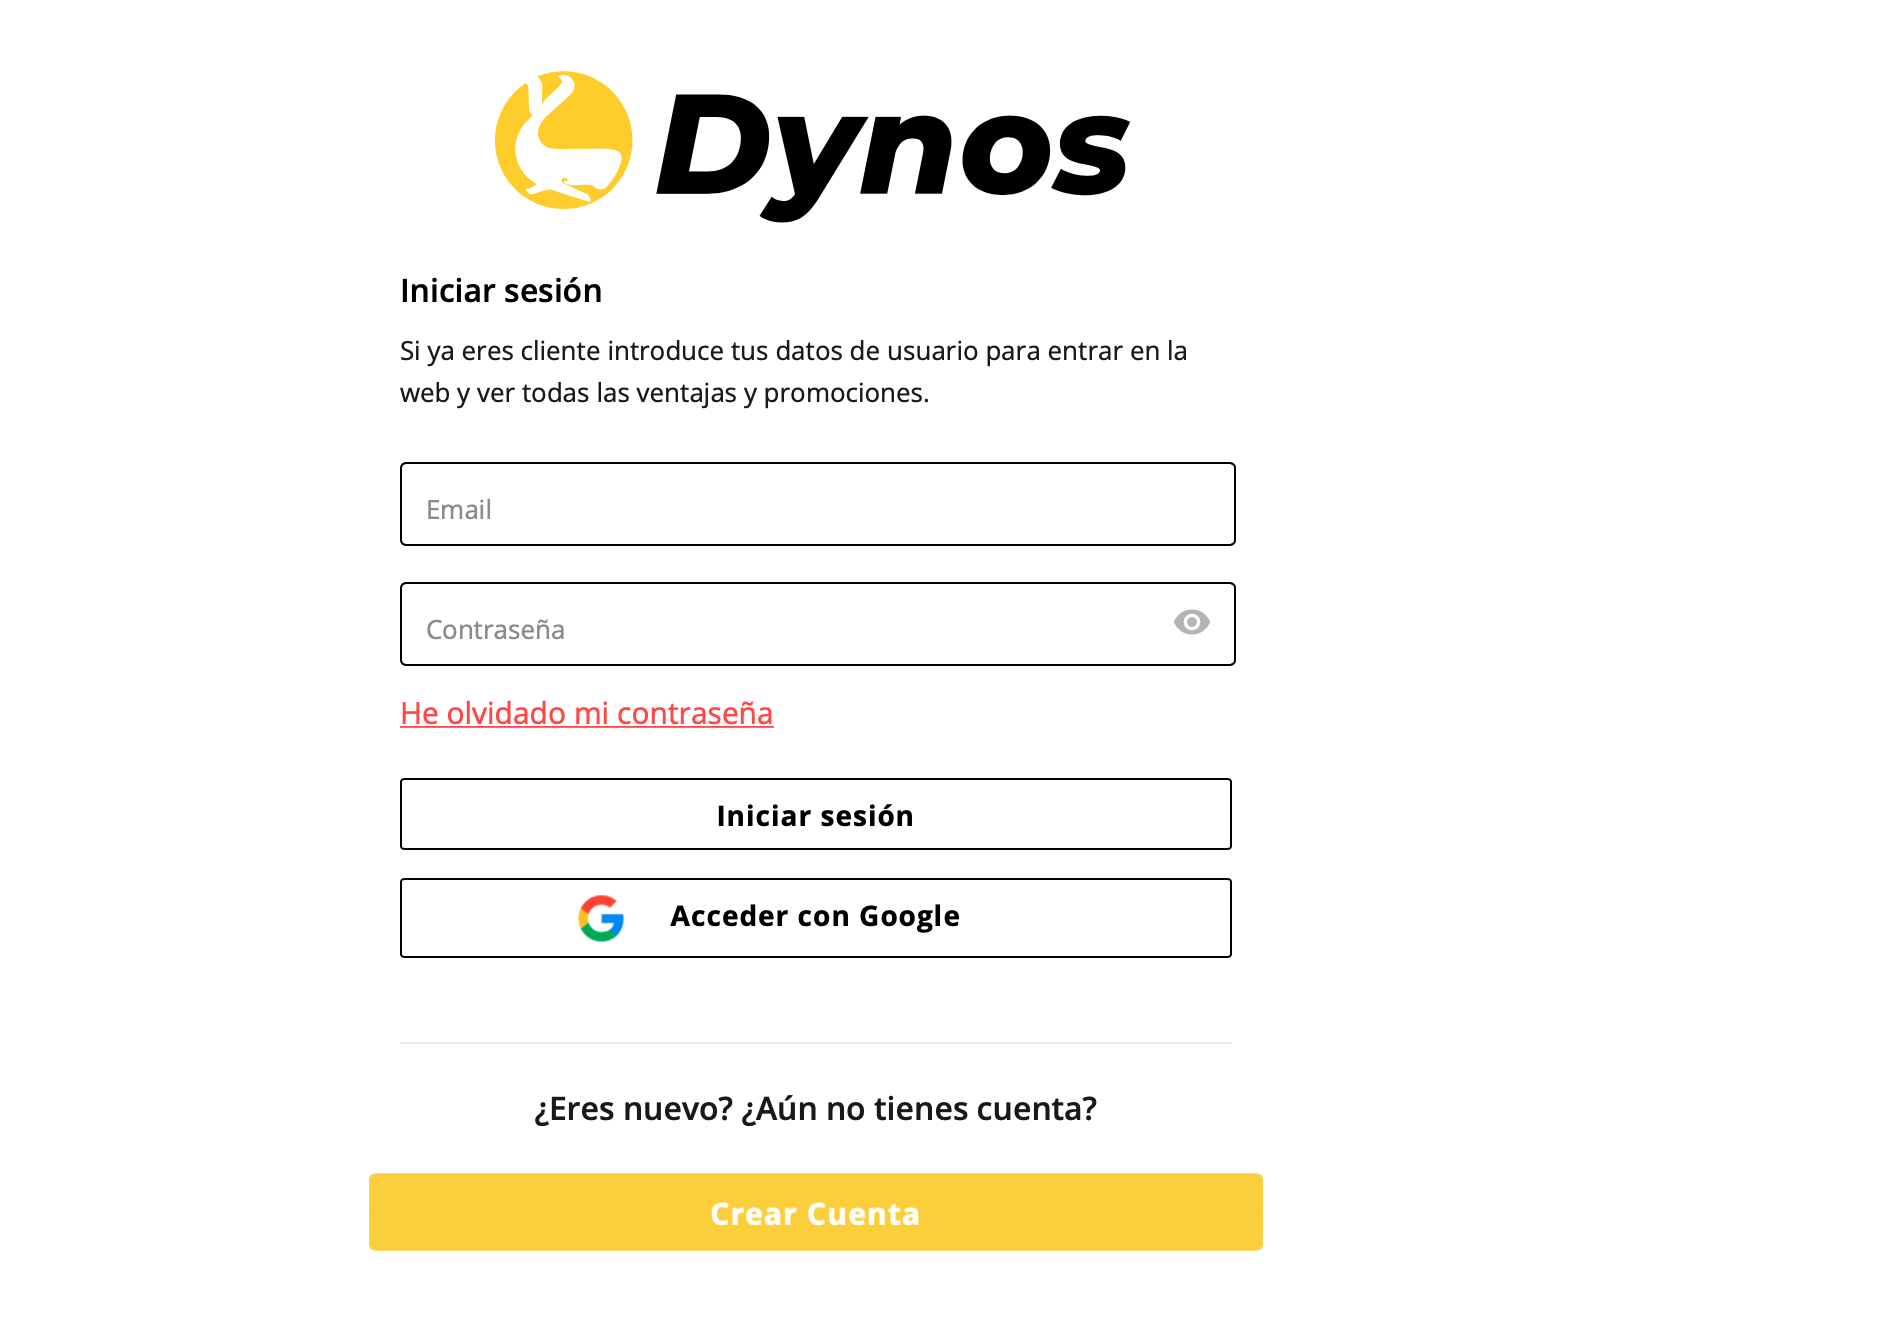 Imagen 9: Usar código promocional en Dynos